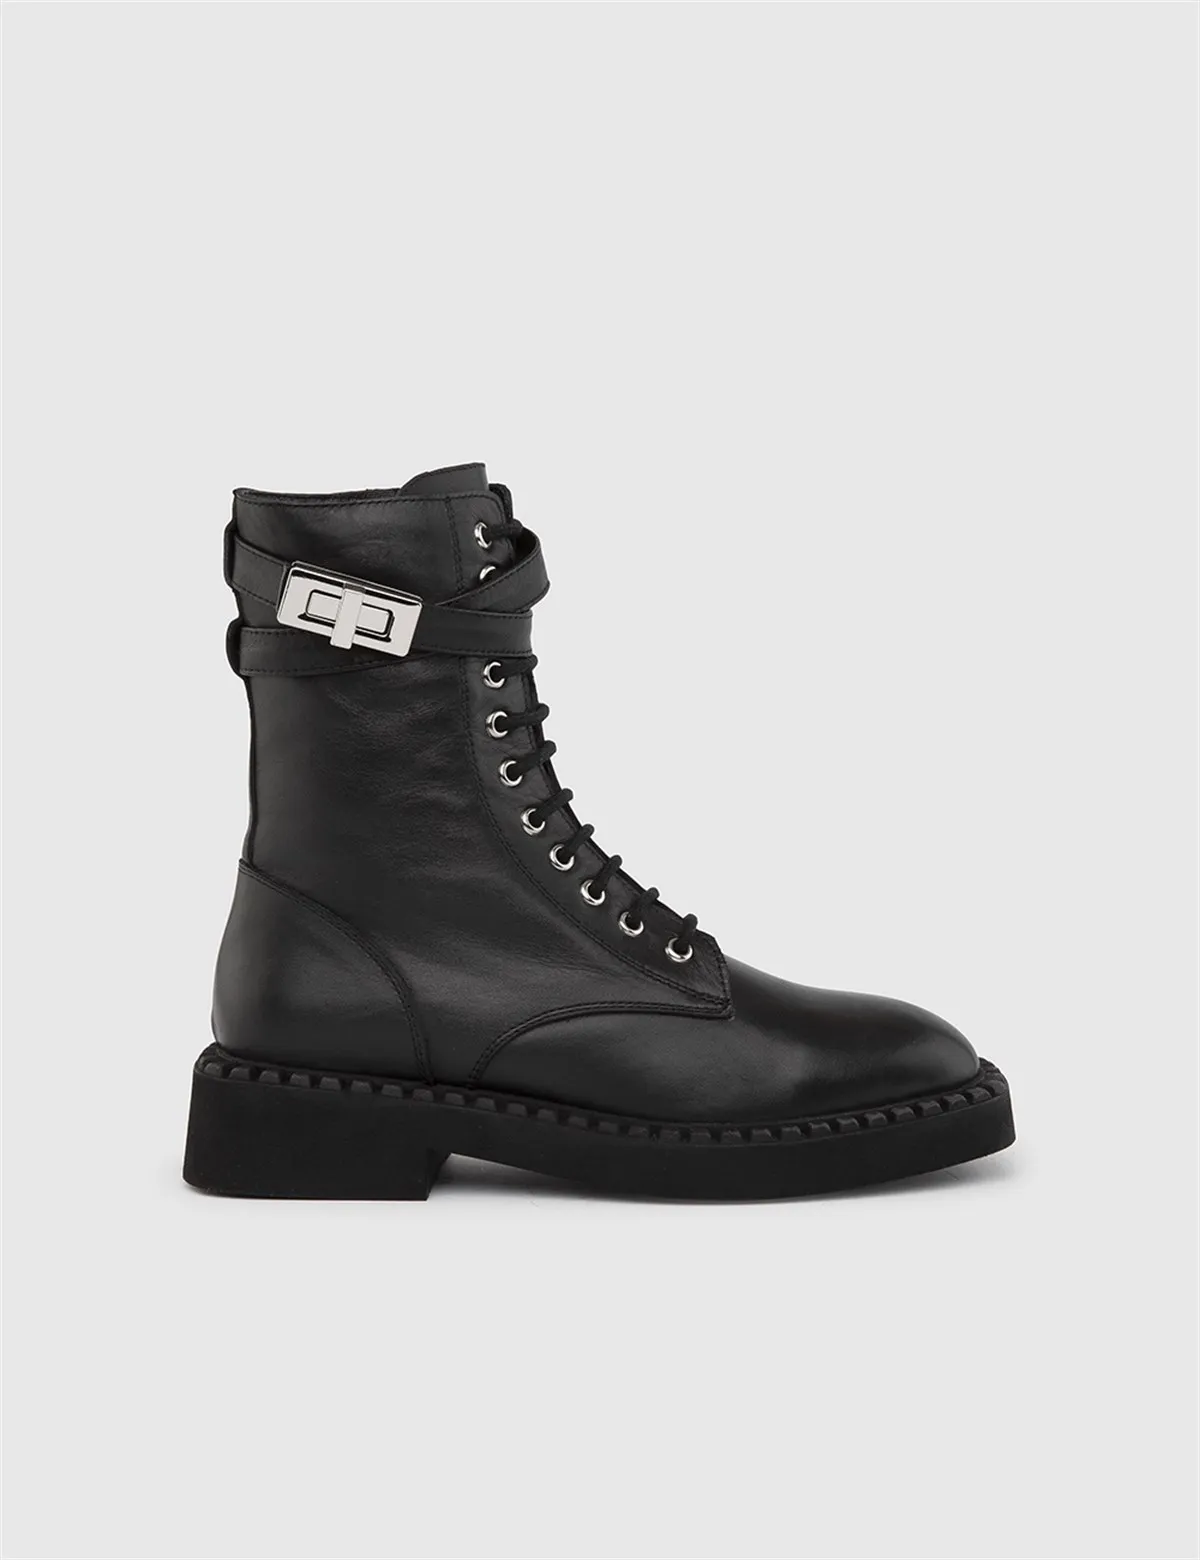 

ILVi-Genuine Leather Handmade Alain Black Leather Women's Boot Women's Shoes 2022 Fall/Winter